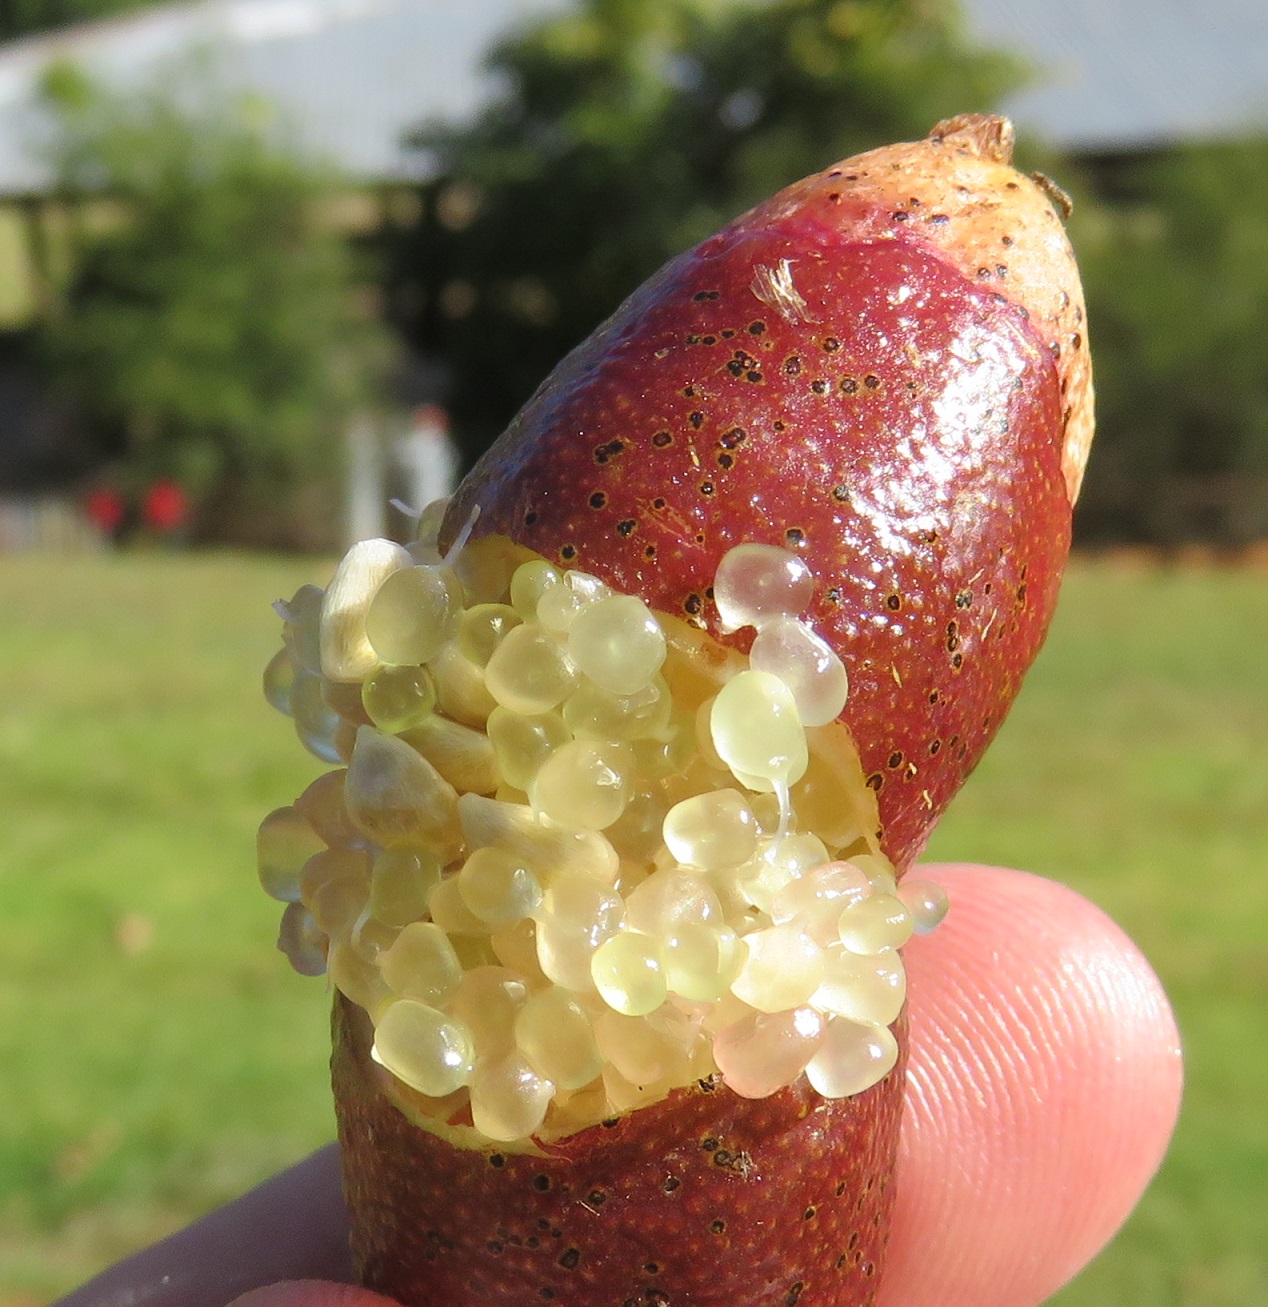 Unique Fruit: The Voavanga Fruit